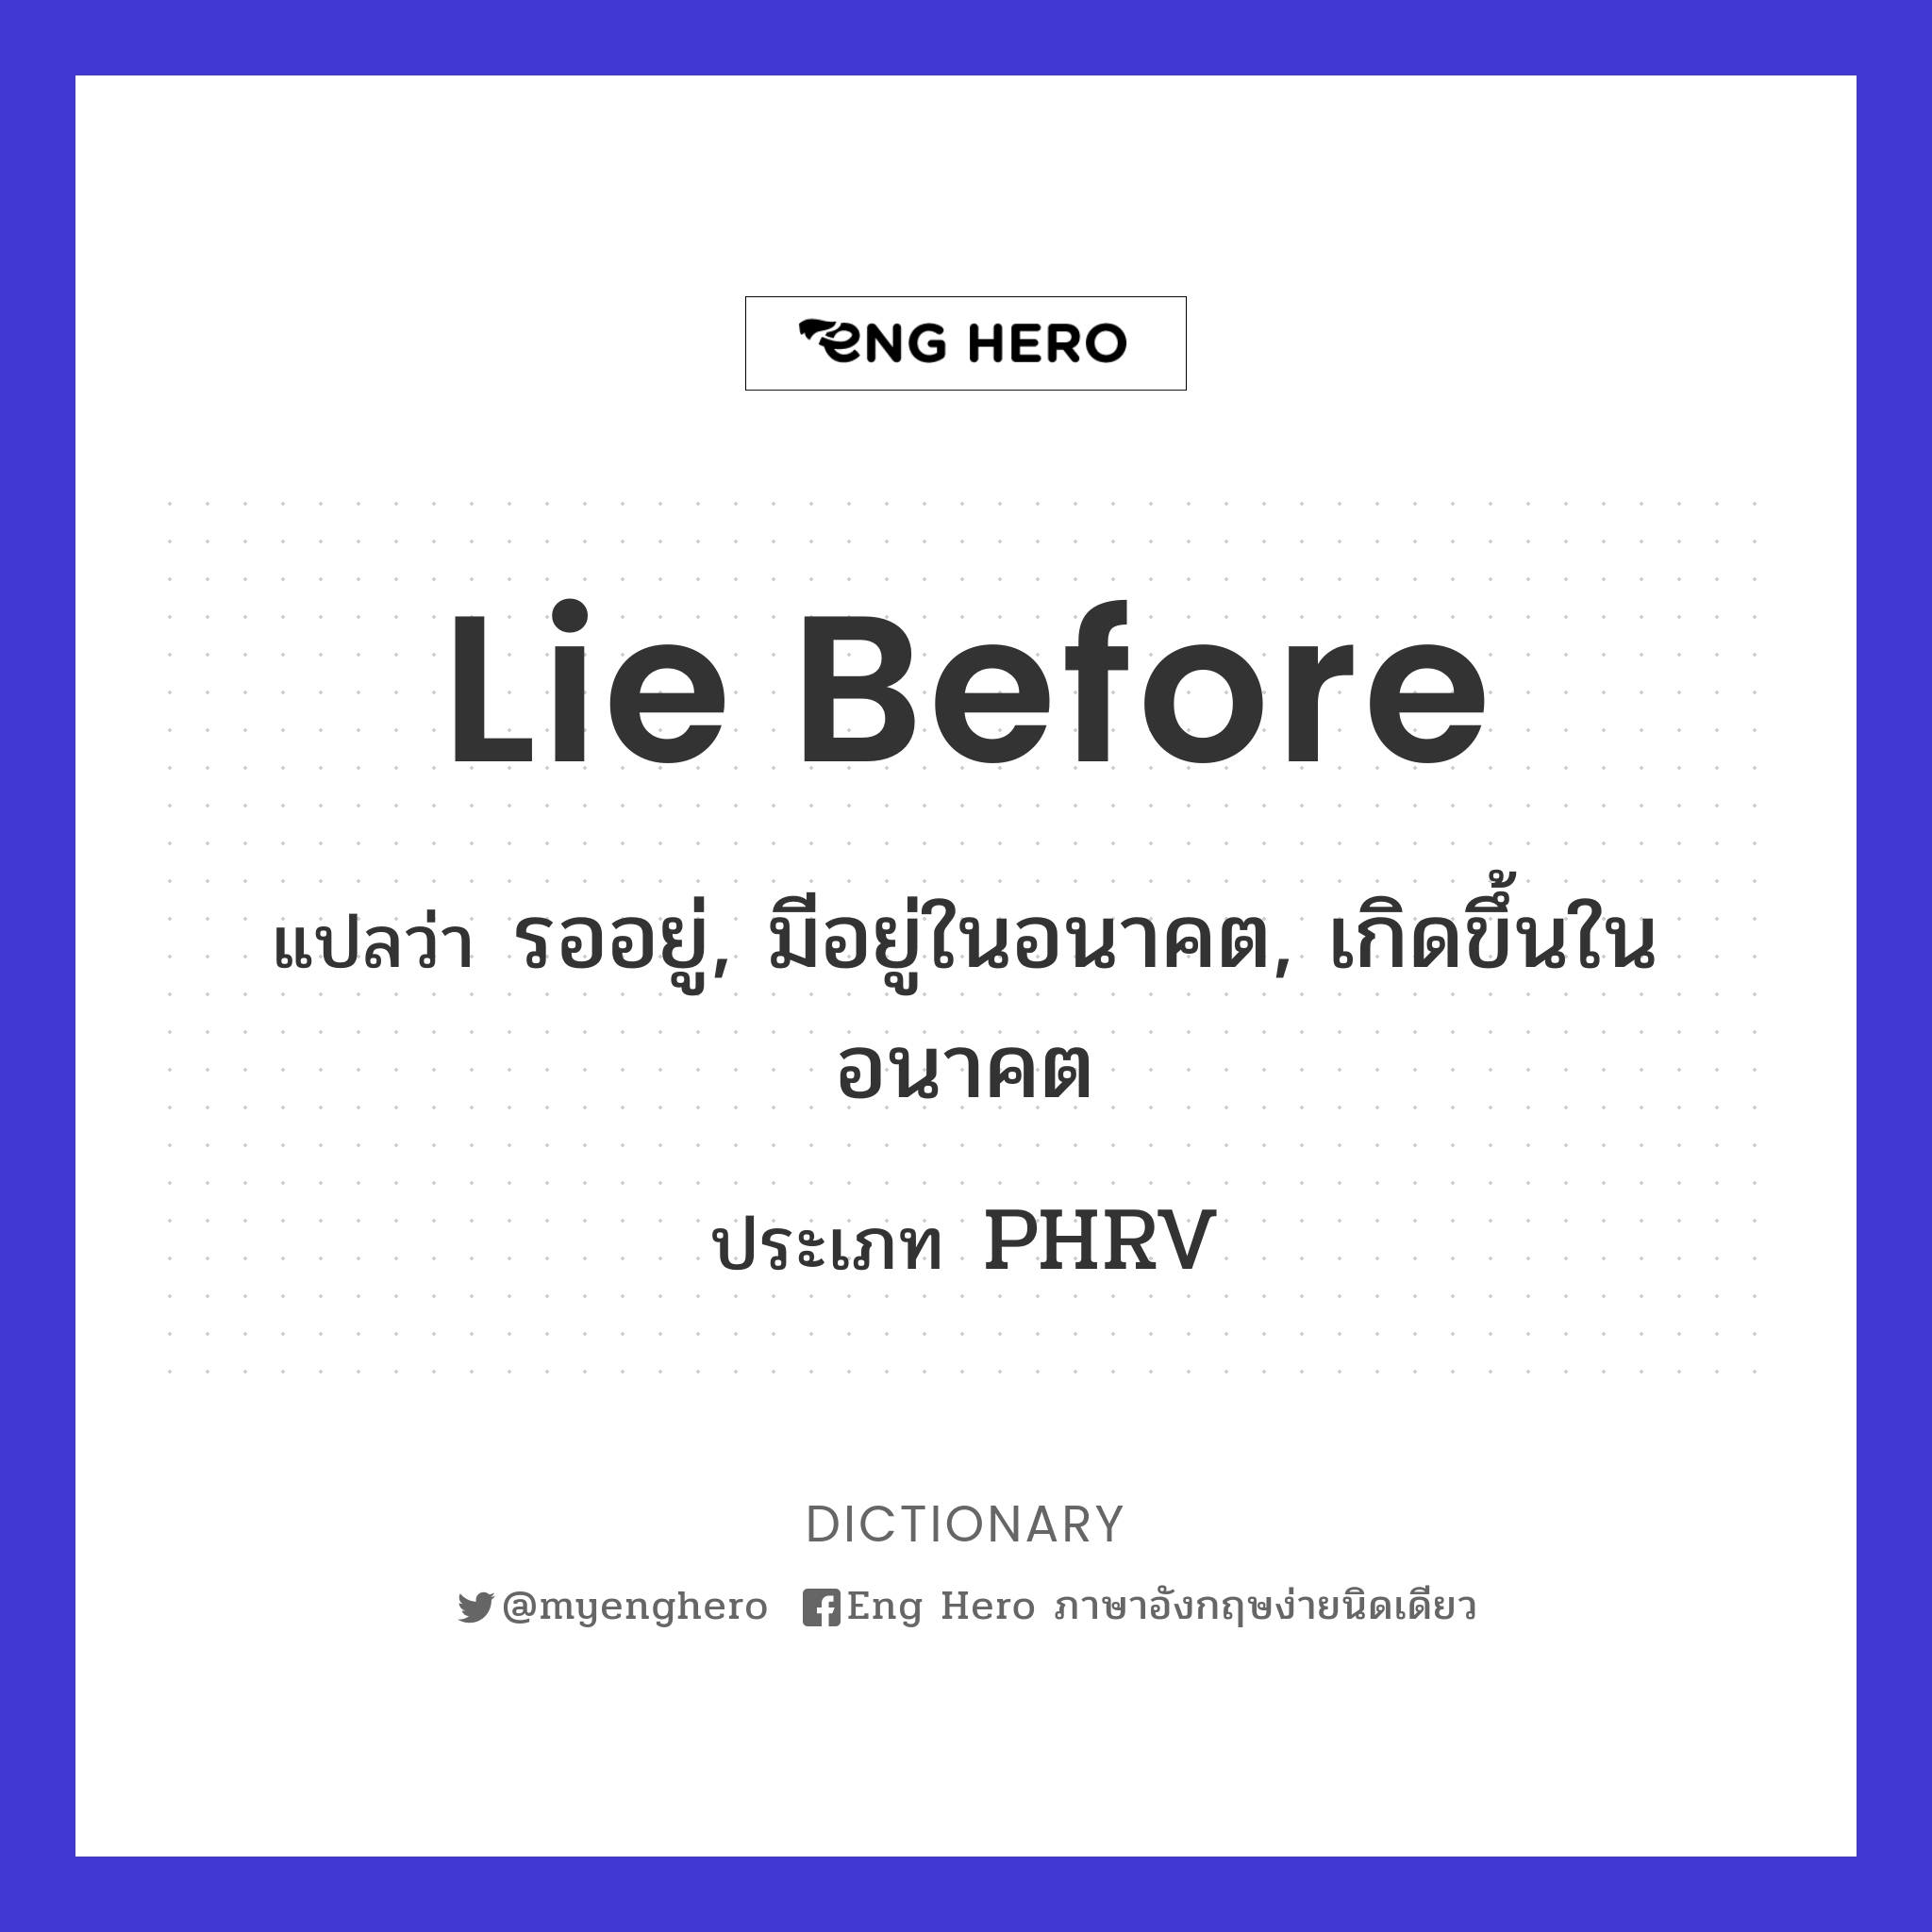 lie before